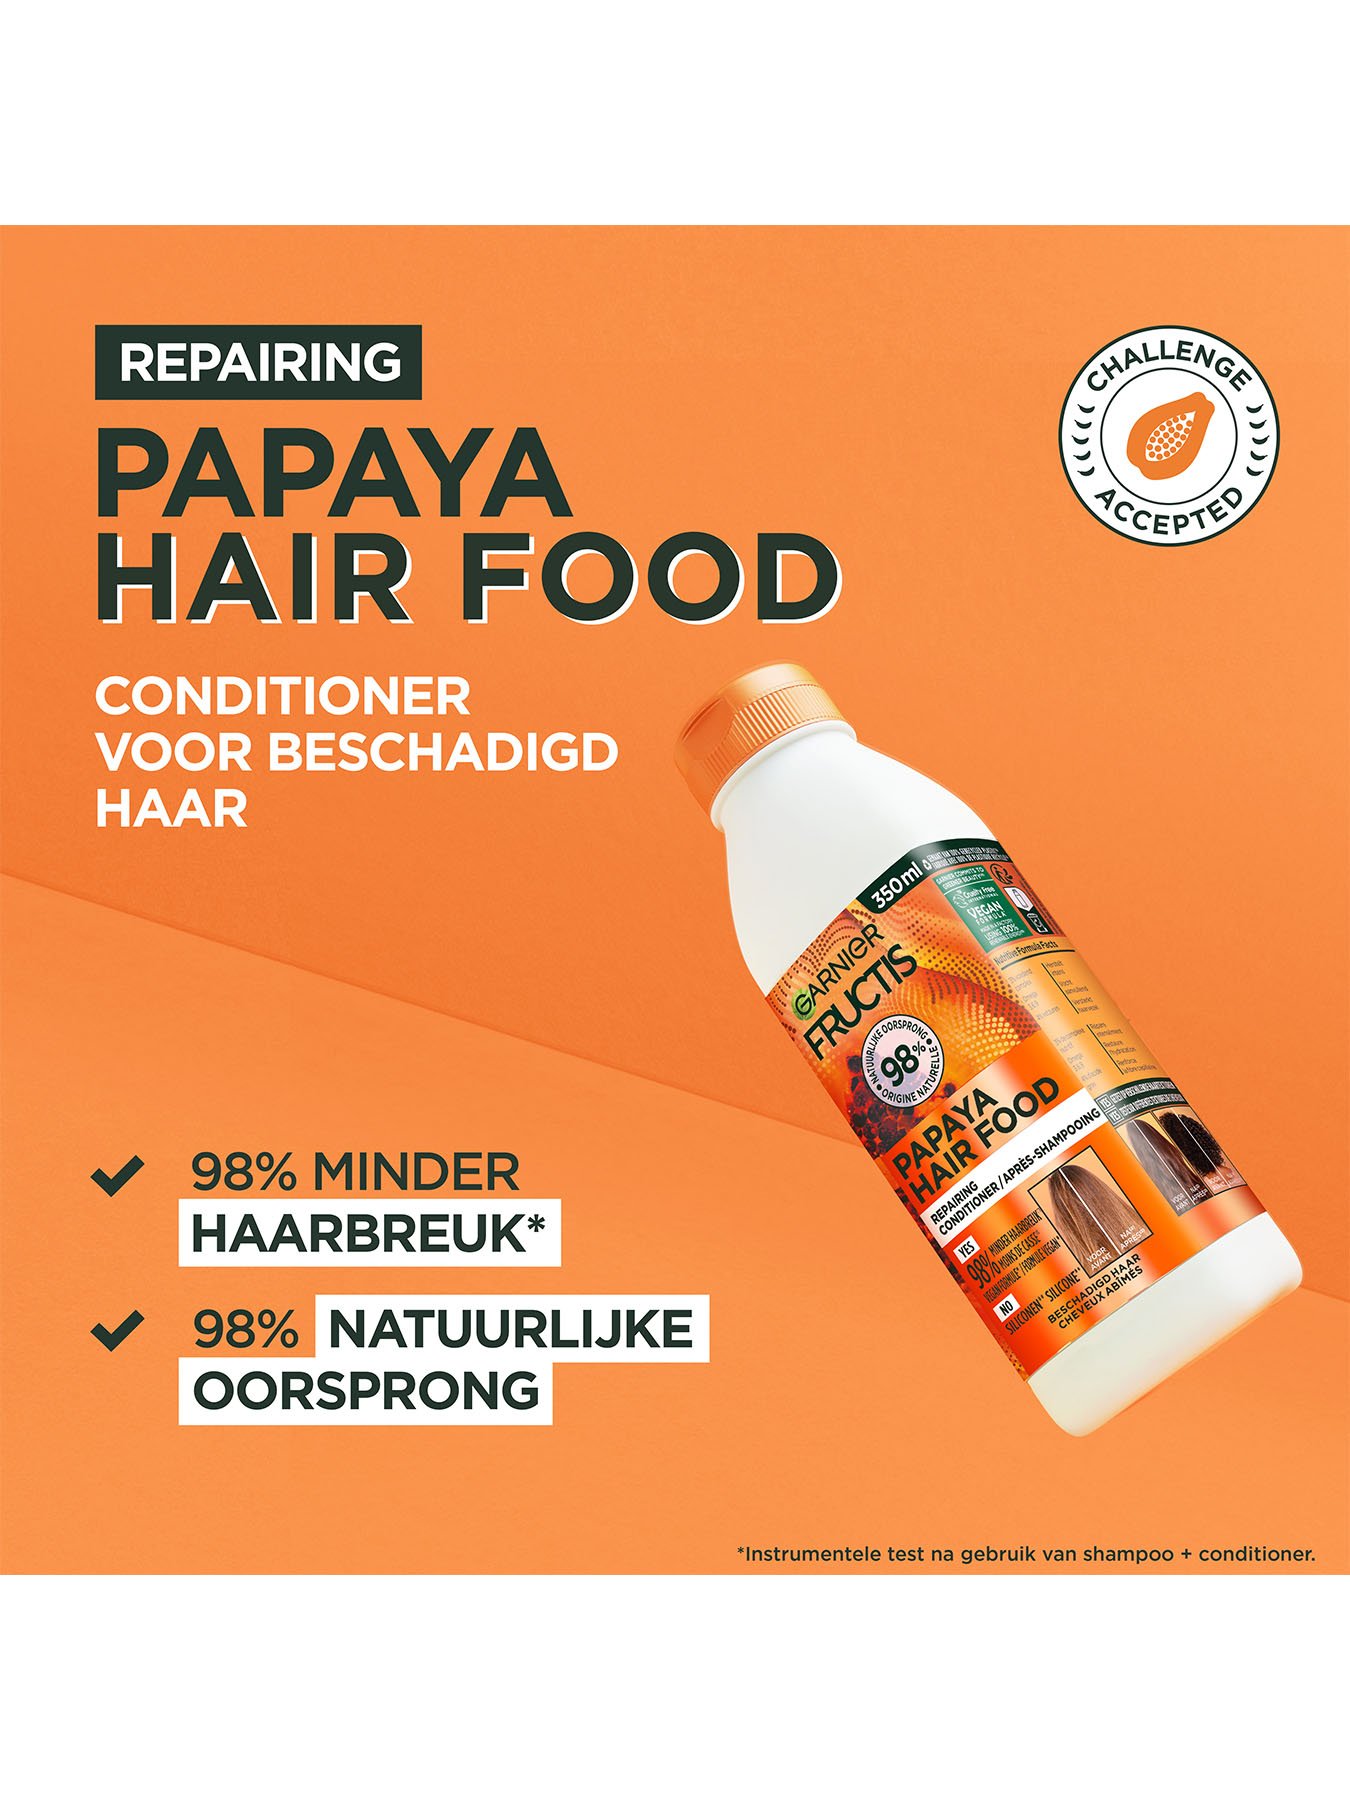 garnier ecom fructis Papaya HairFoodConditioner 28Jun23 Benefits 1x1 NLjpg master